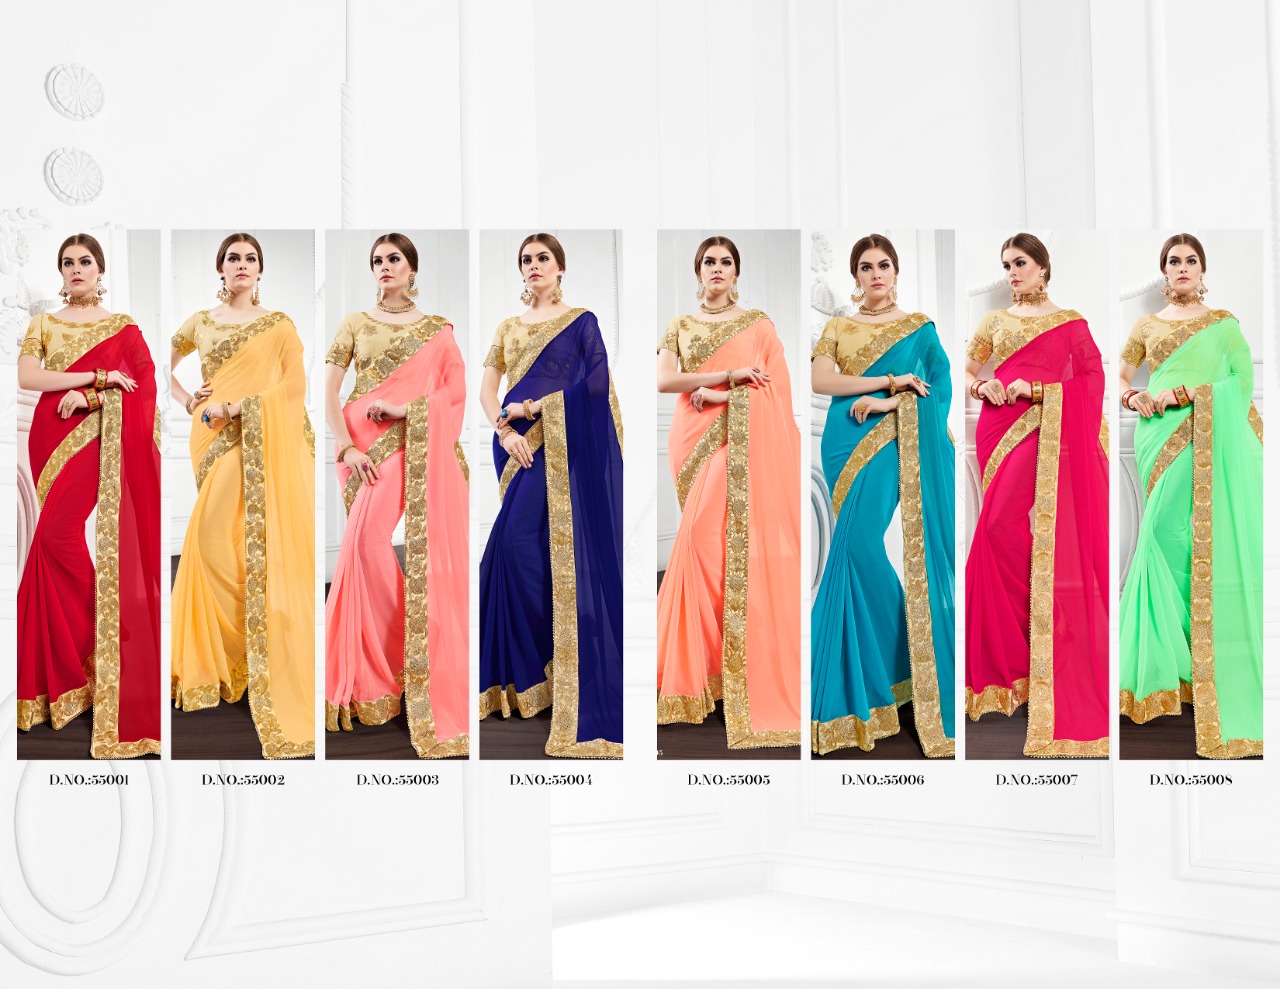 Saroj Saree Indian Fashion 55001-55008